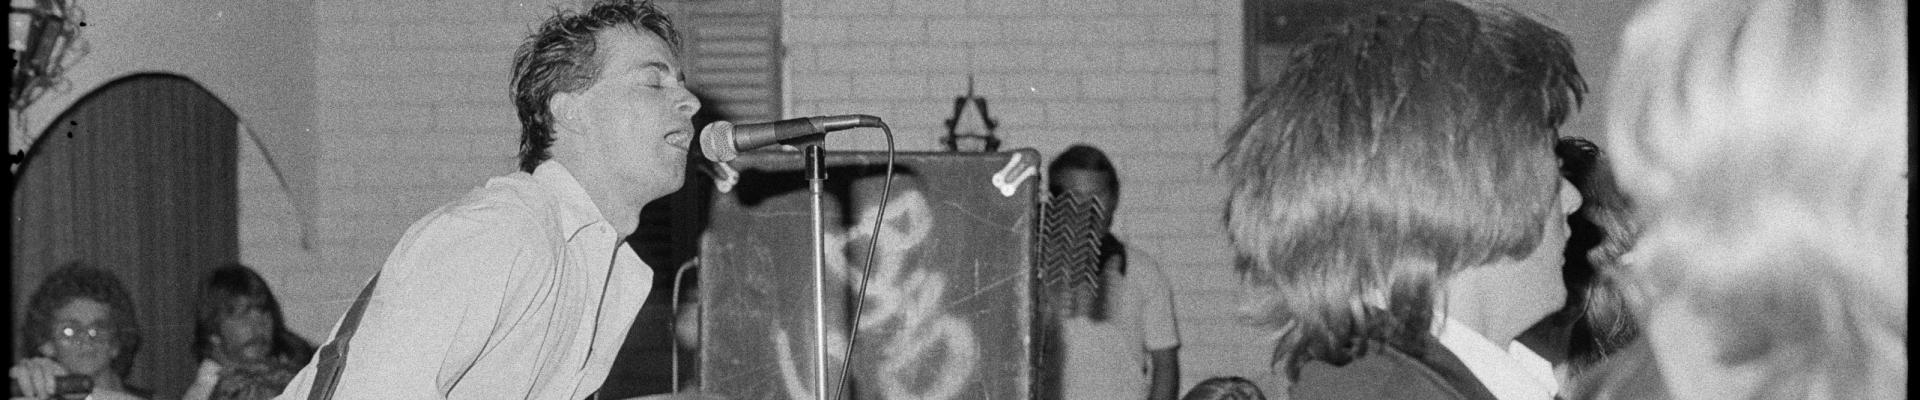 The Victims performing their final show at Hernandos Hideaway Hay Street East Perth Western Australia 17 June 1978